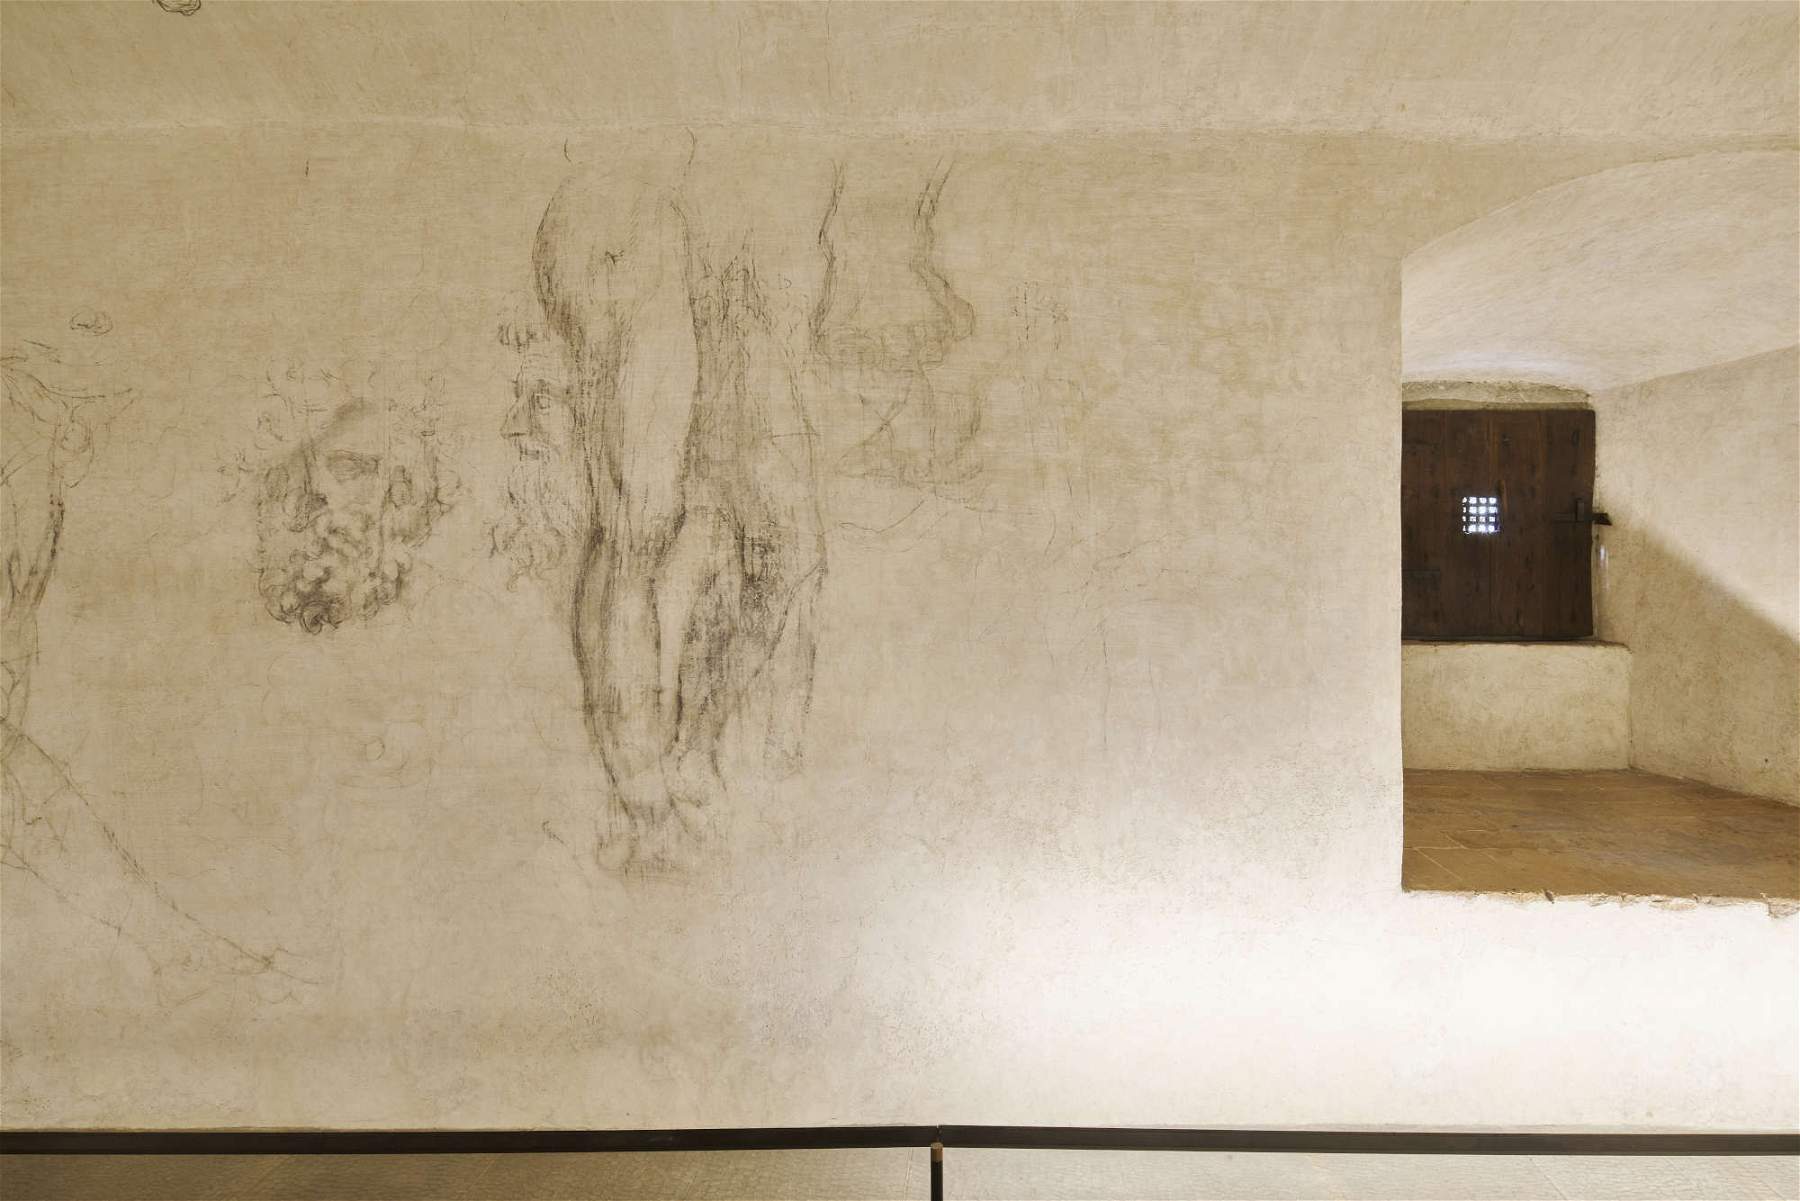 Surprise at Medici Chapels: three more months to visit Michelangelo's Secret Room 